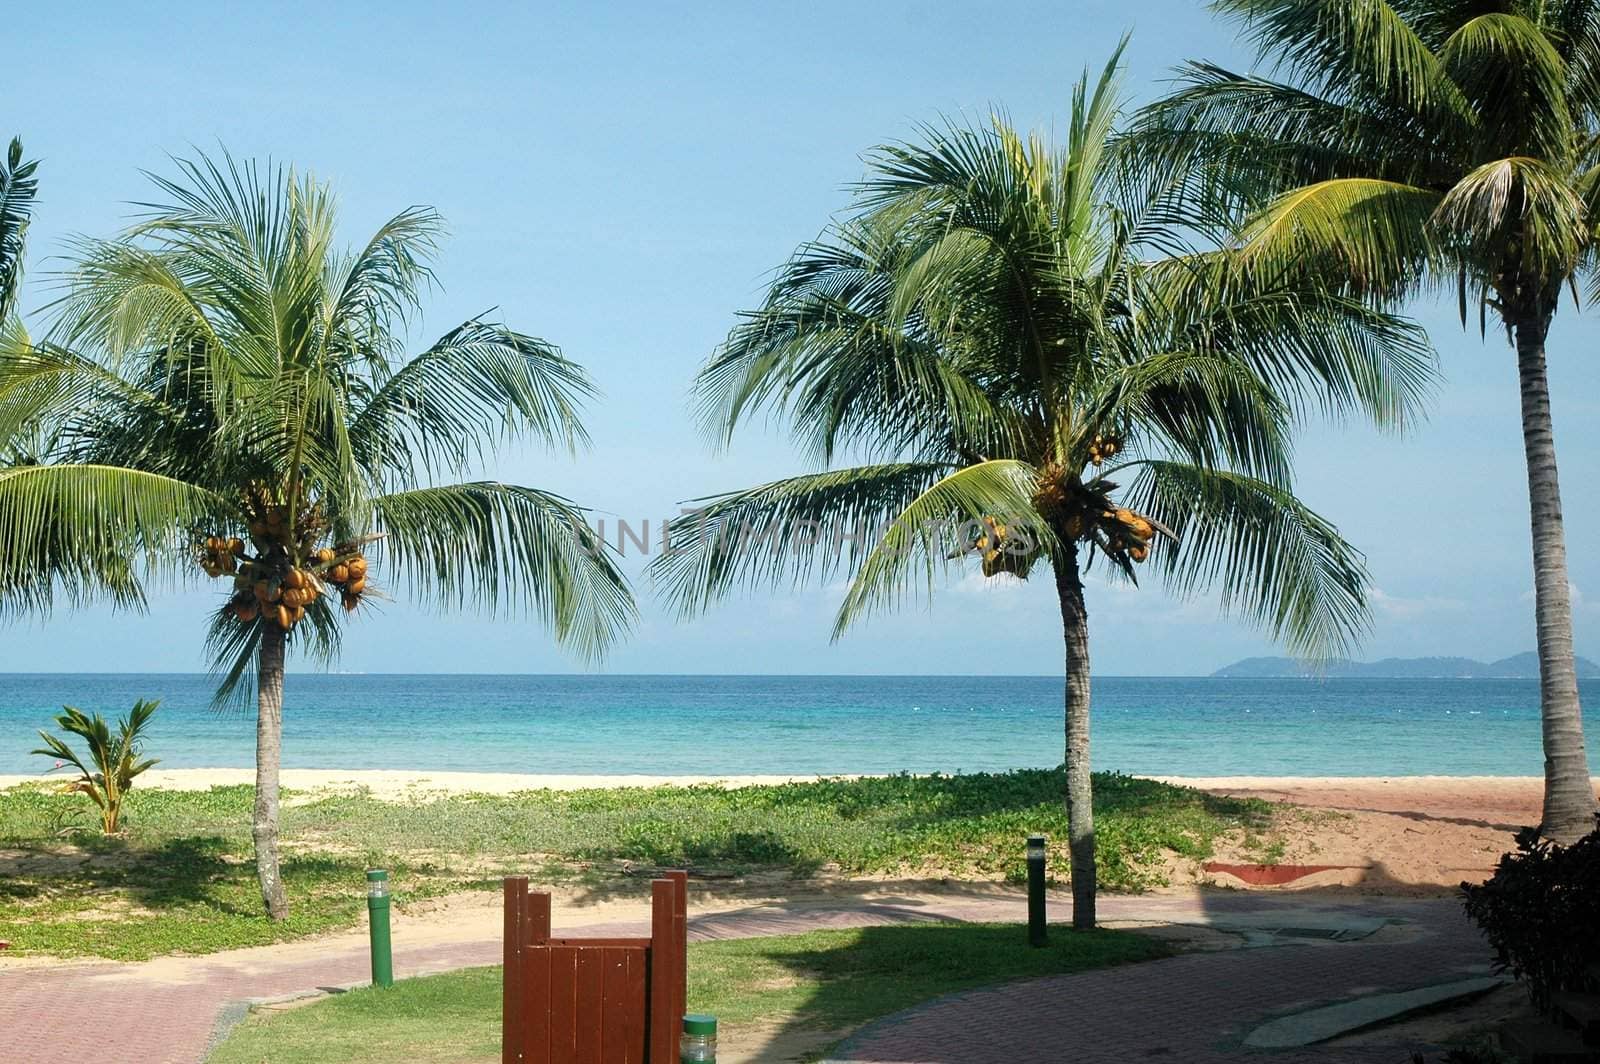 Palm Tree On A Beach by khwi